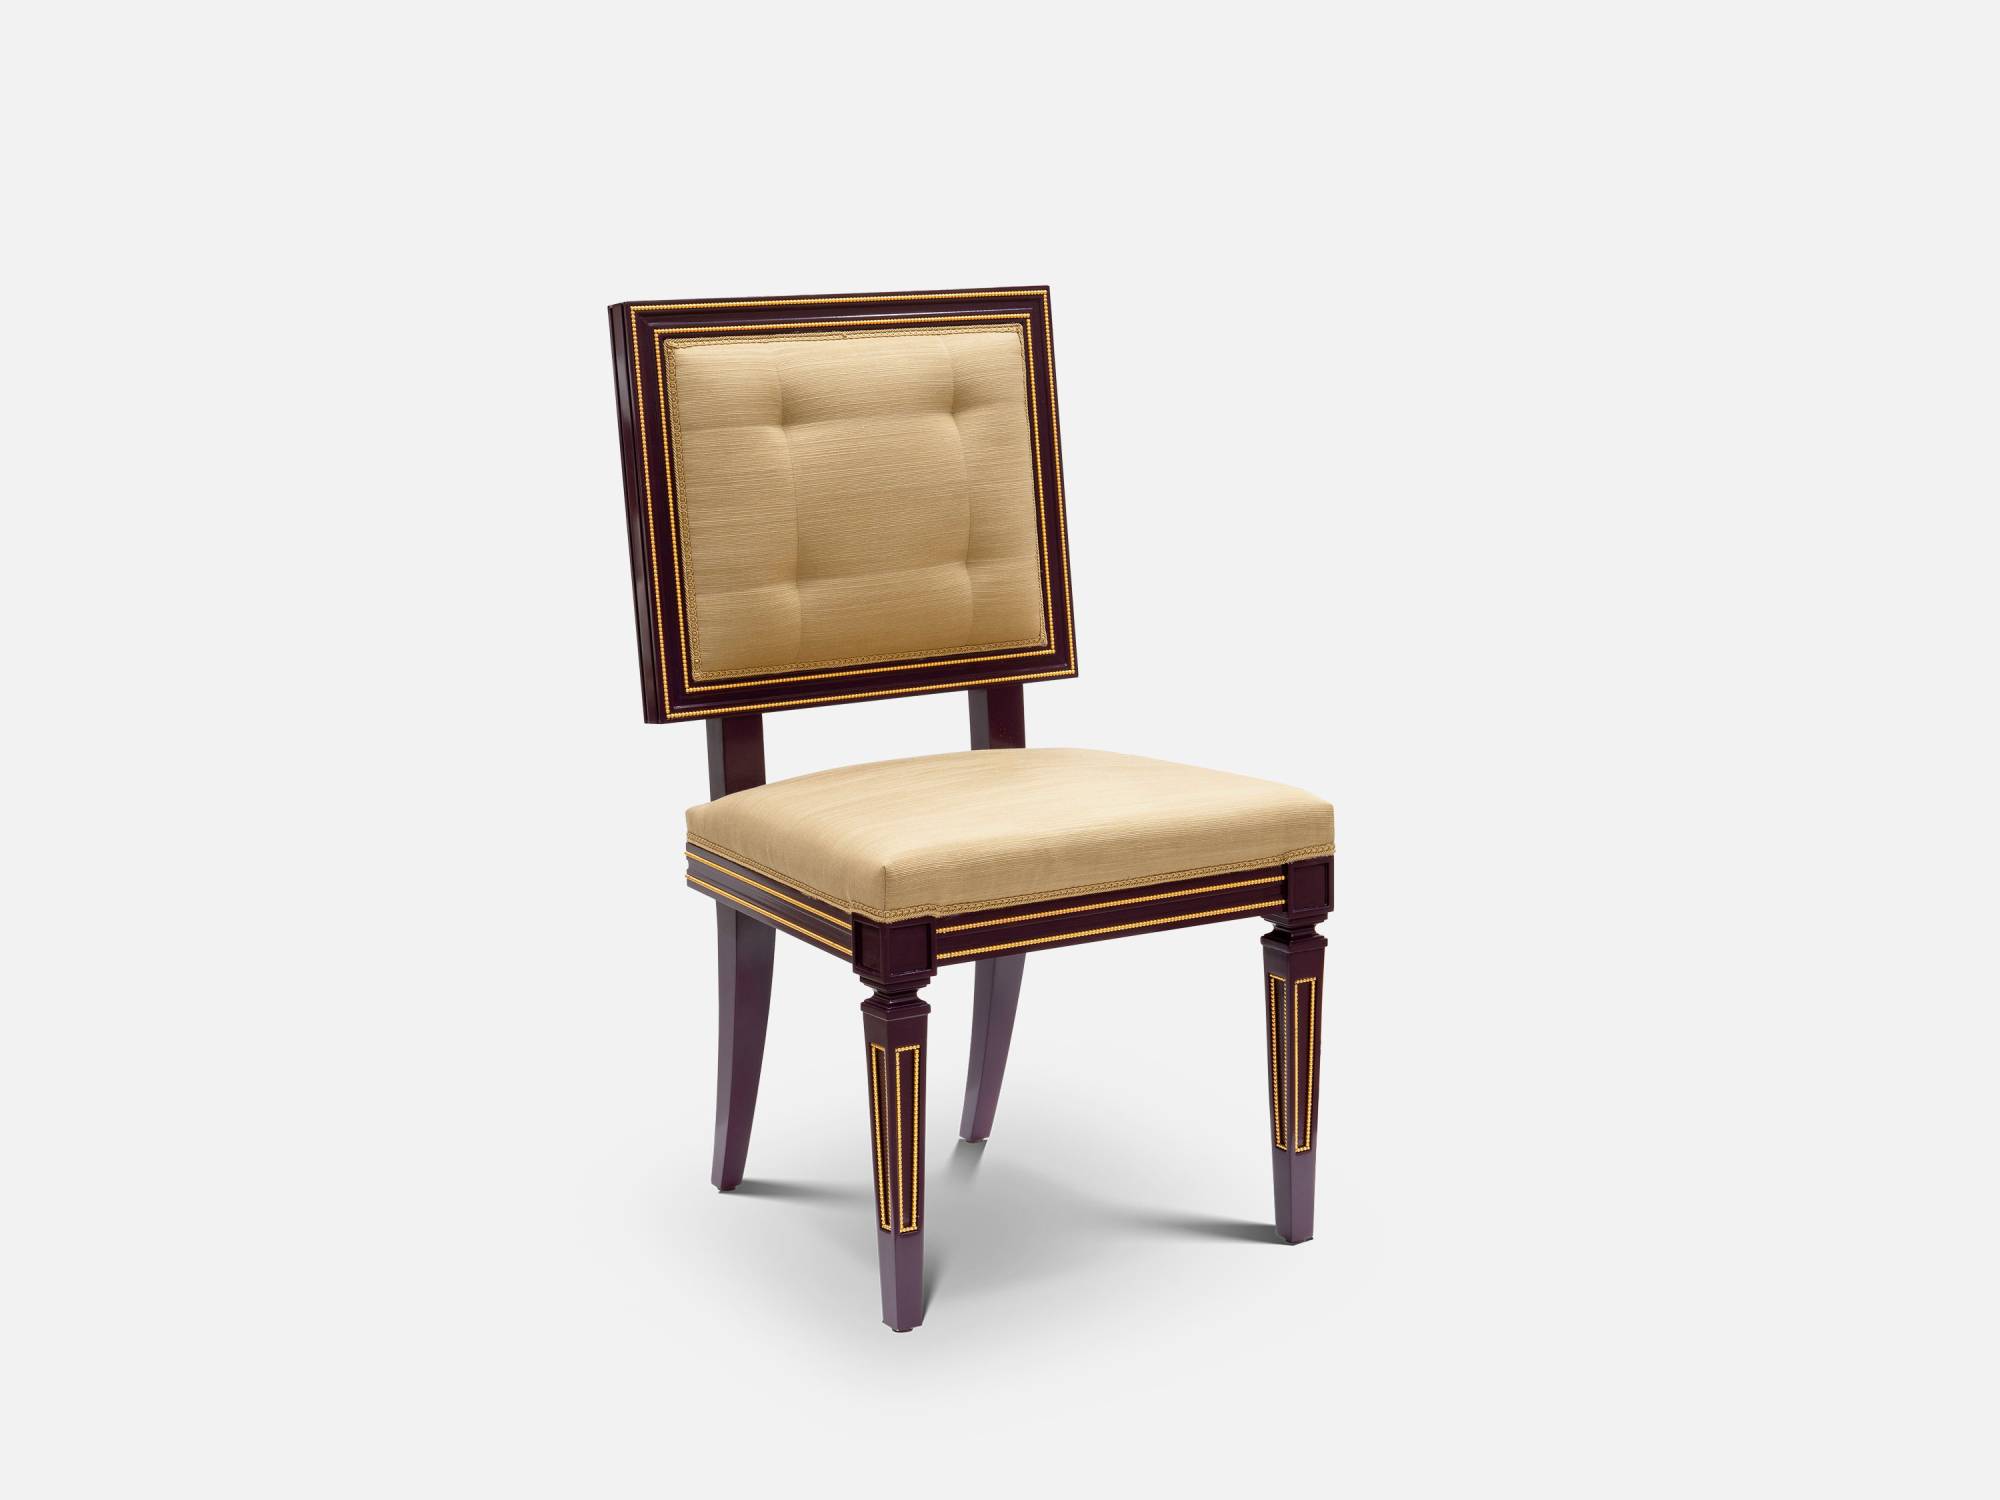 ART. 2297 – C.G. Capelletti Italian Luxury Classic Chairs. Made in Italy classic interior design